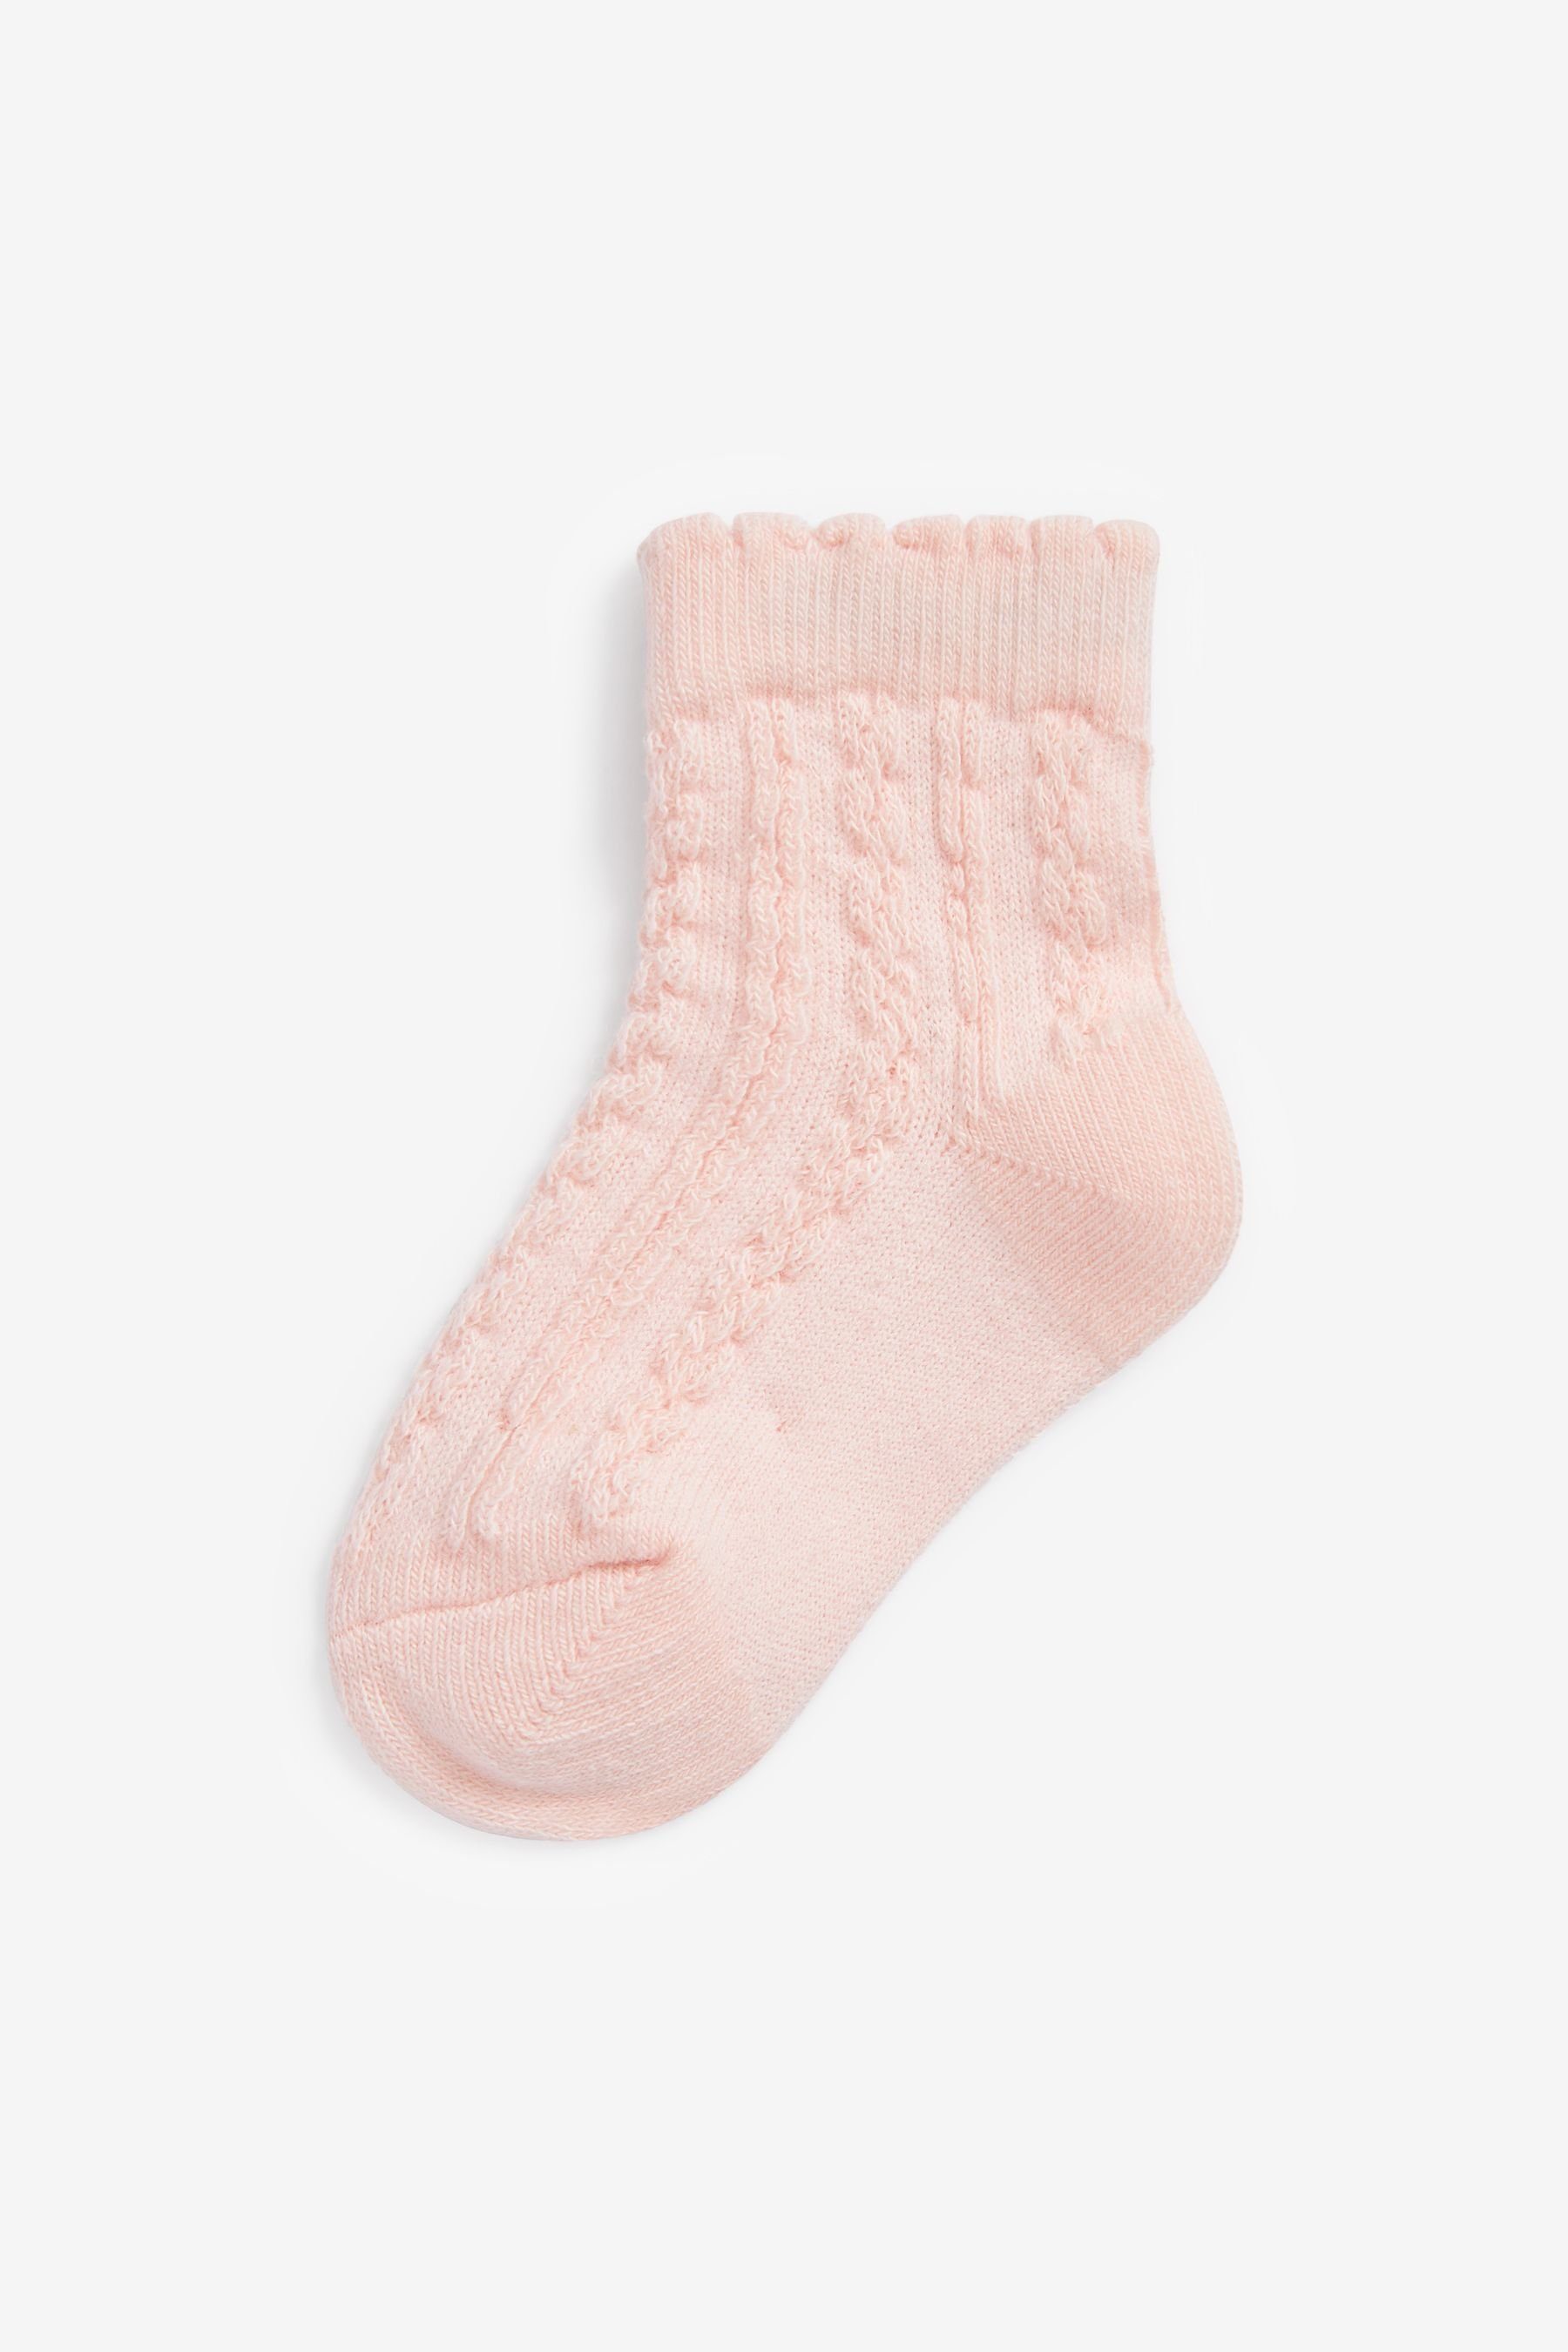 Next Kurzsocken (7-Paar) Cable Baby-Socken 7er-Pack im Pink/White Knit